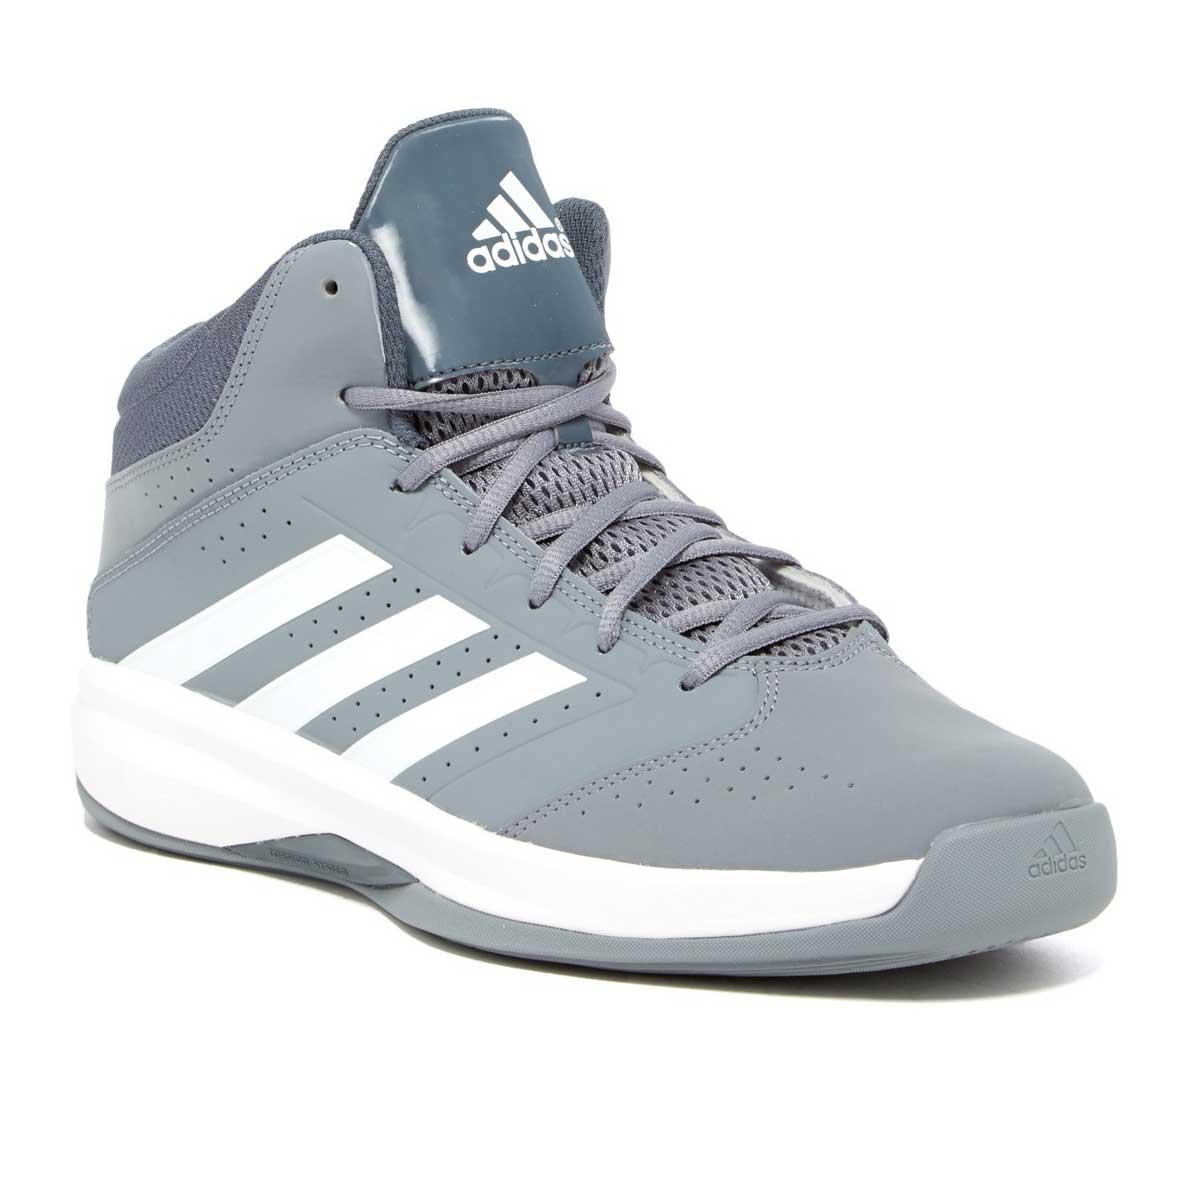 Adidas Basketball Shoes Gray Clearance | bellvalefarms.com